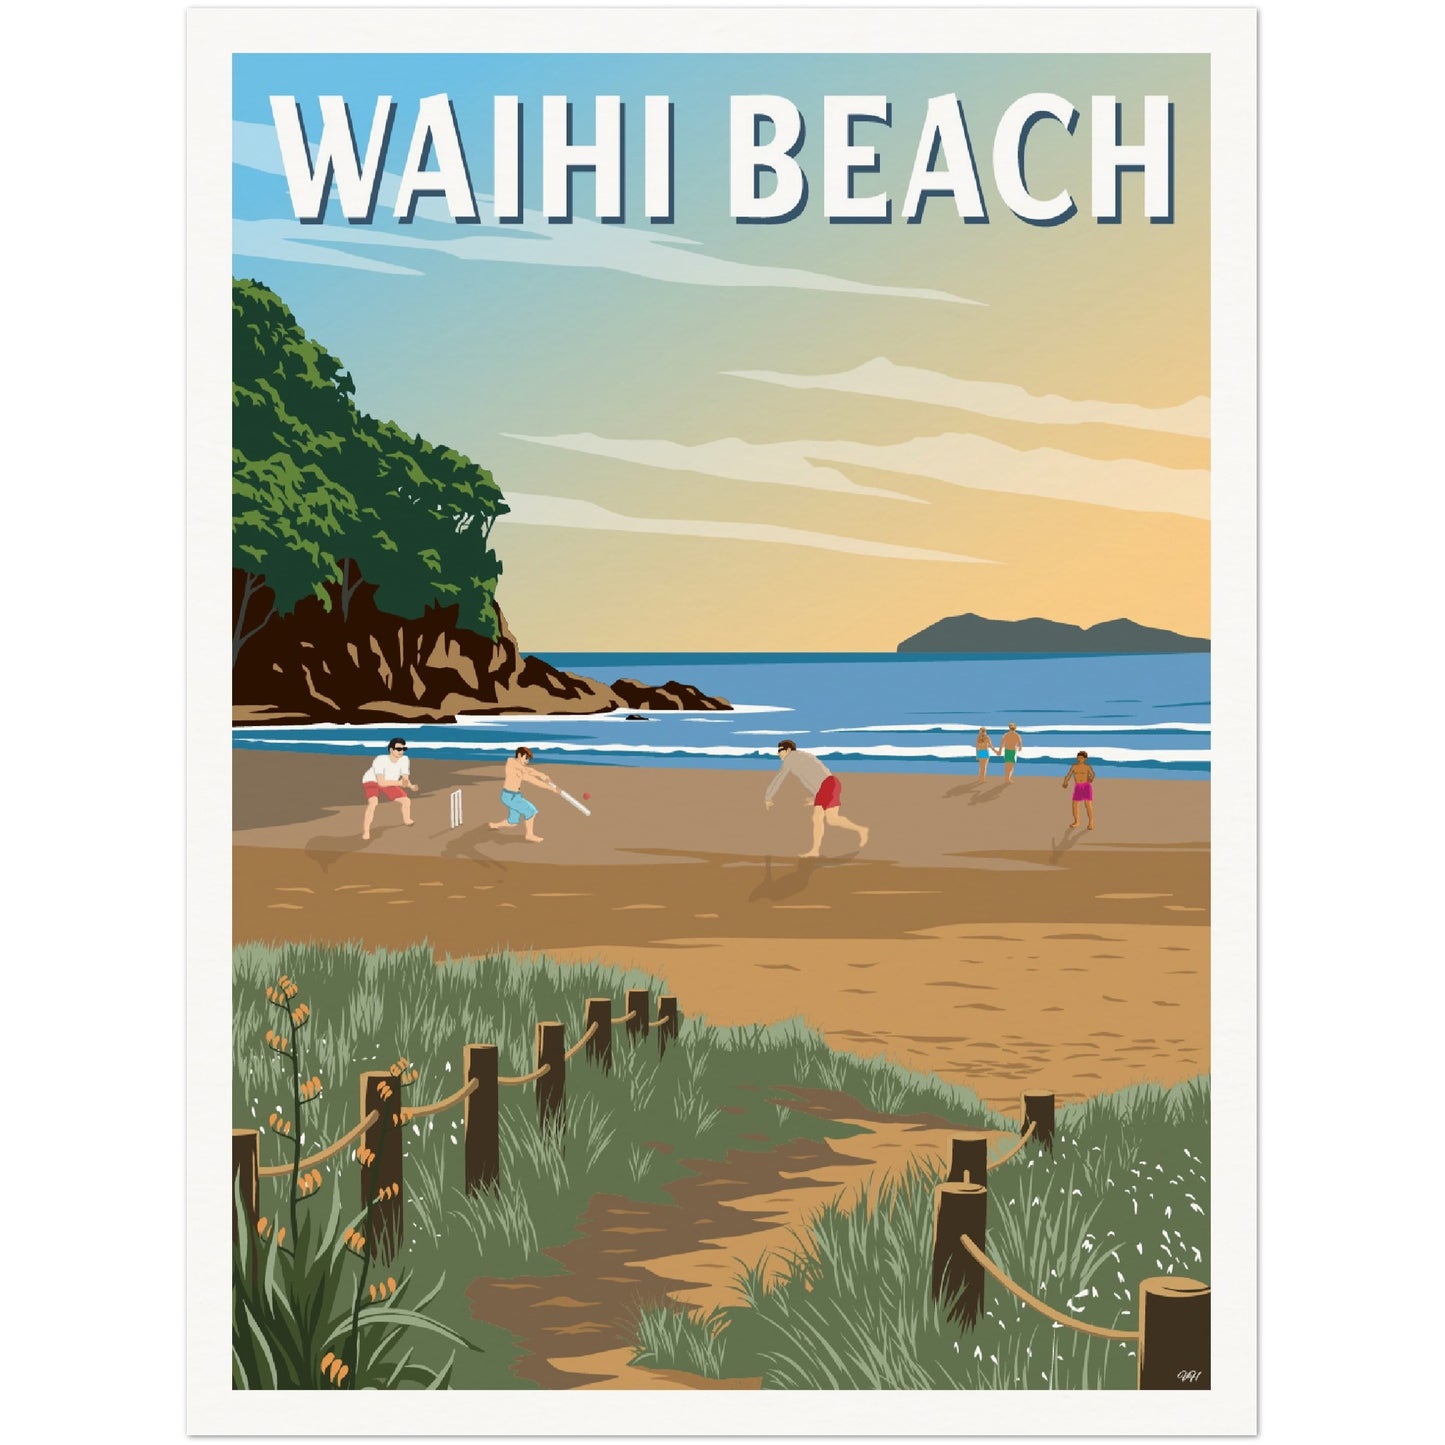 Waihi Beach Travel Poster, New Zealand